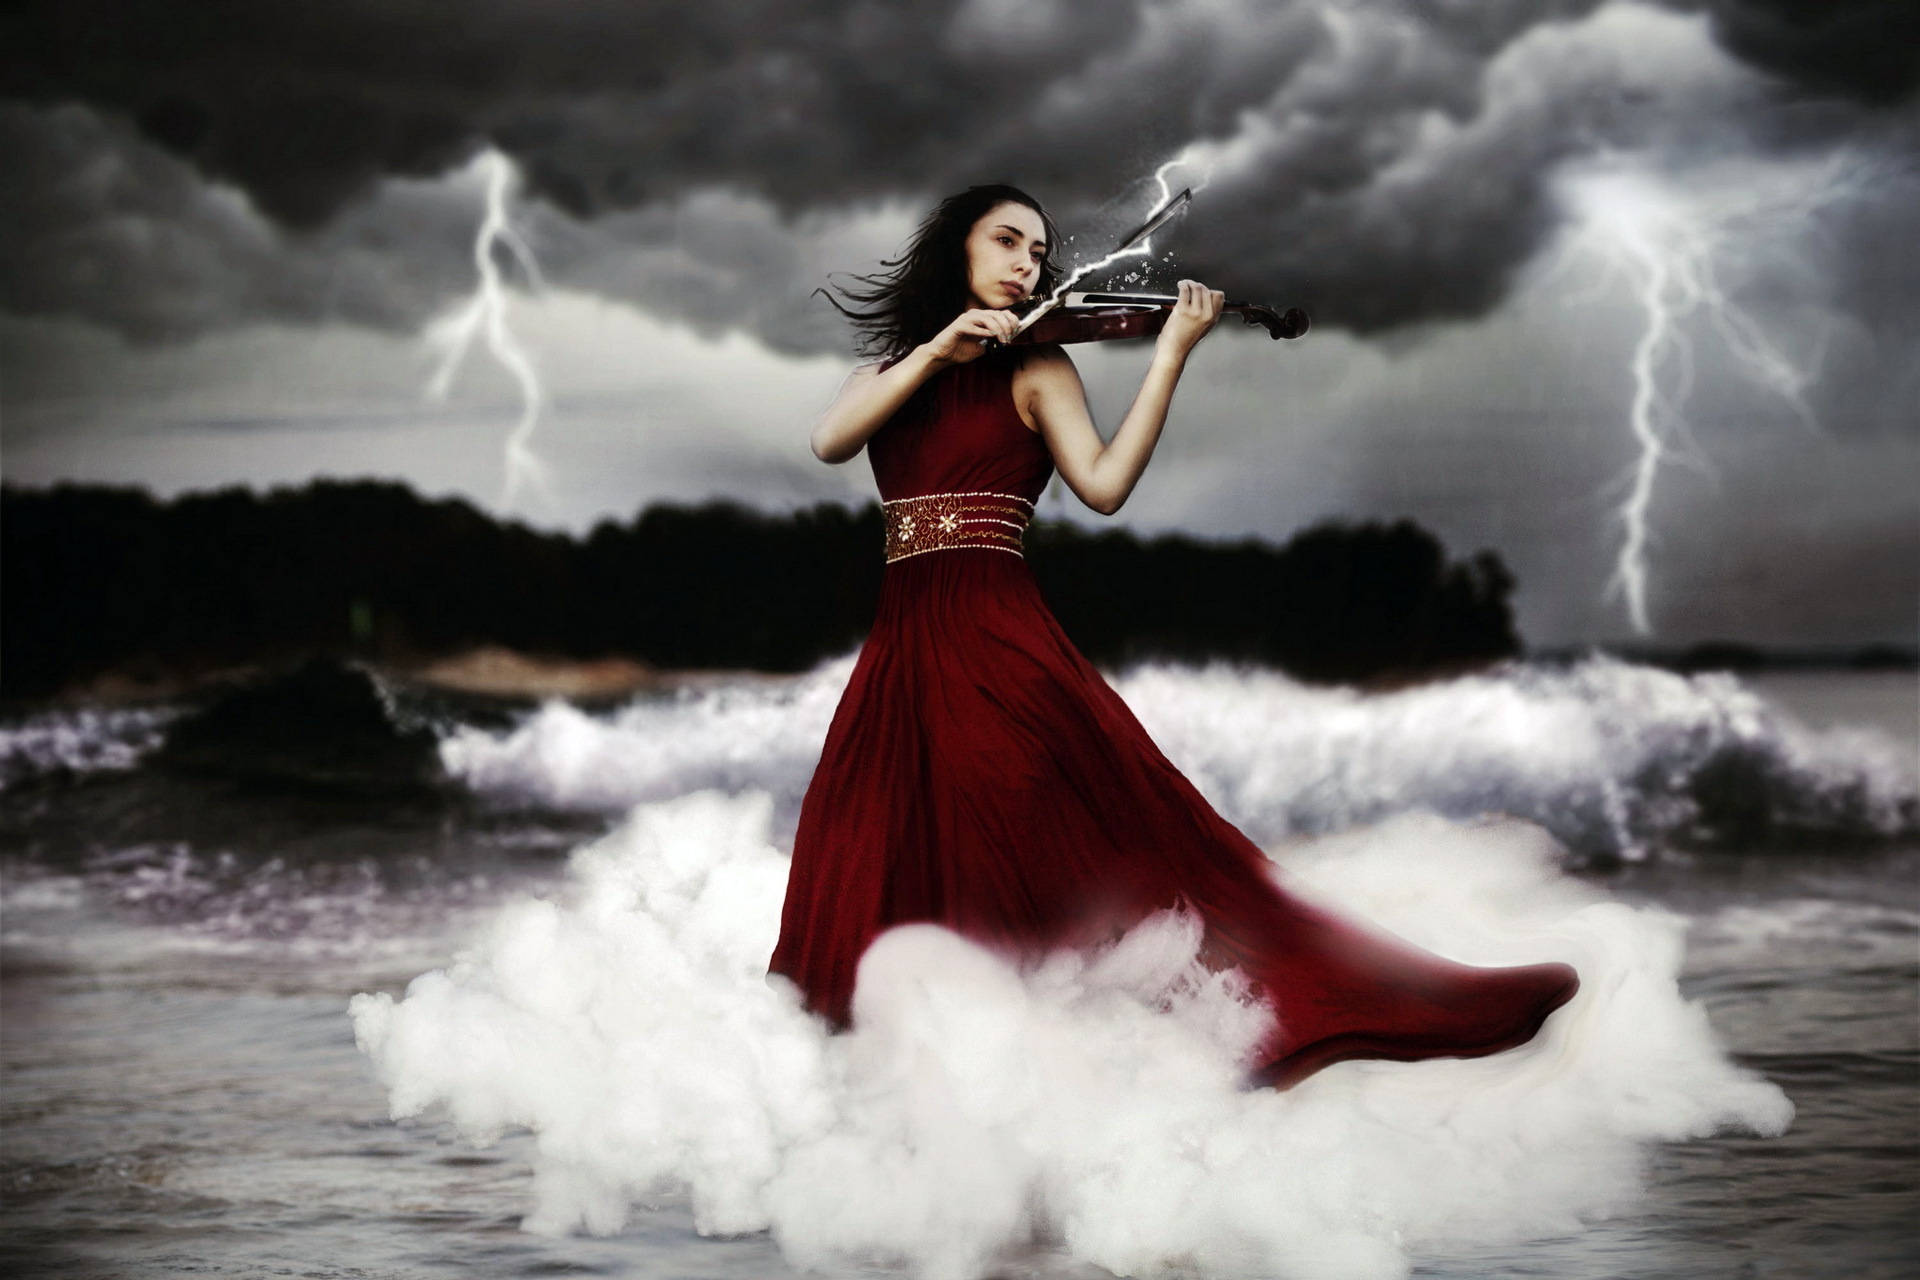 Female violinist lightning fantasy art wallpaper.